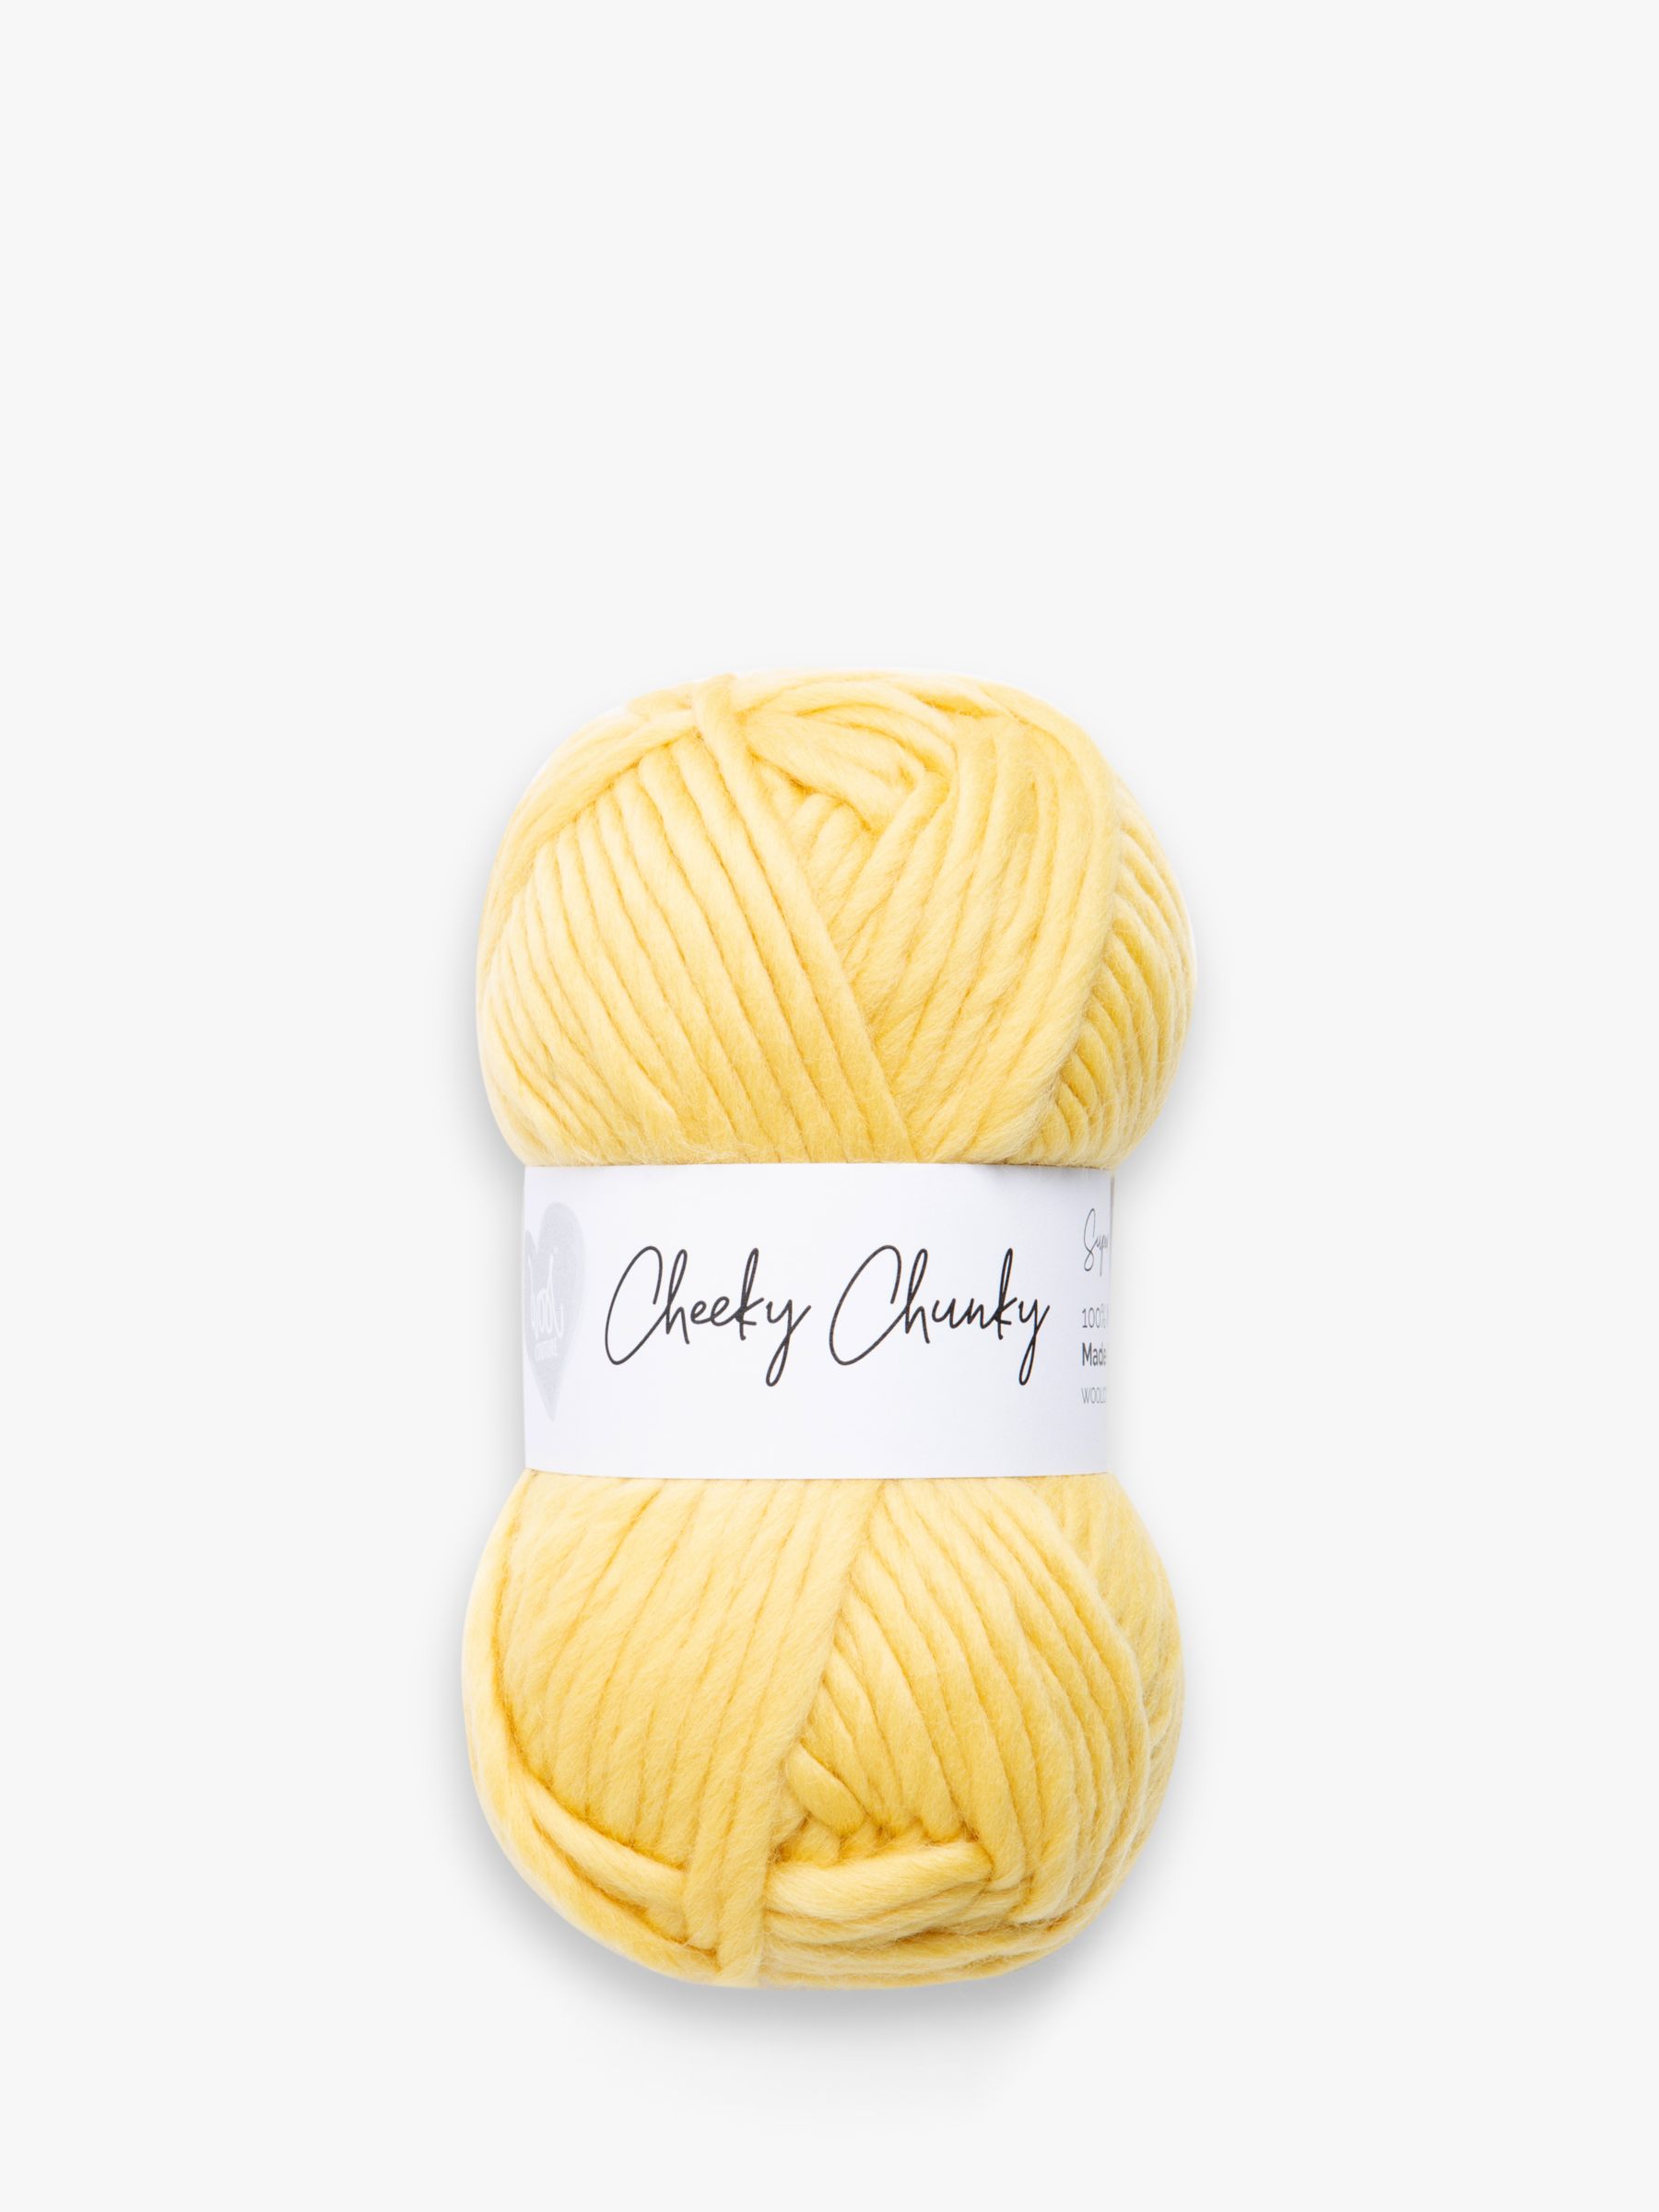 Lemon Super Chunky Yarn. Cheeky Chunky Yarn by Wool Couture. 100g